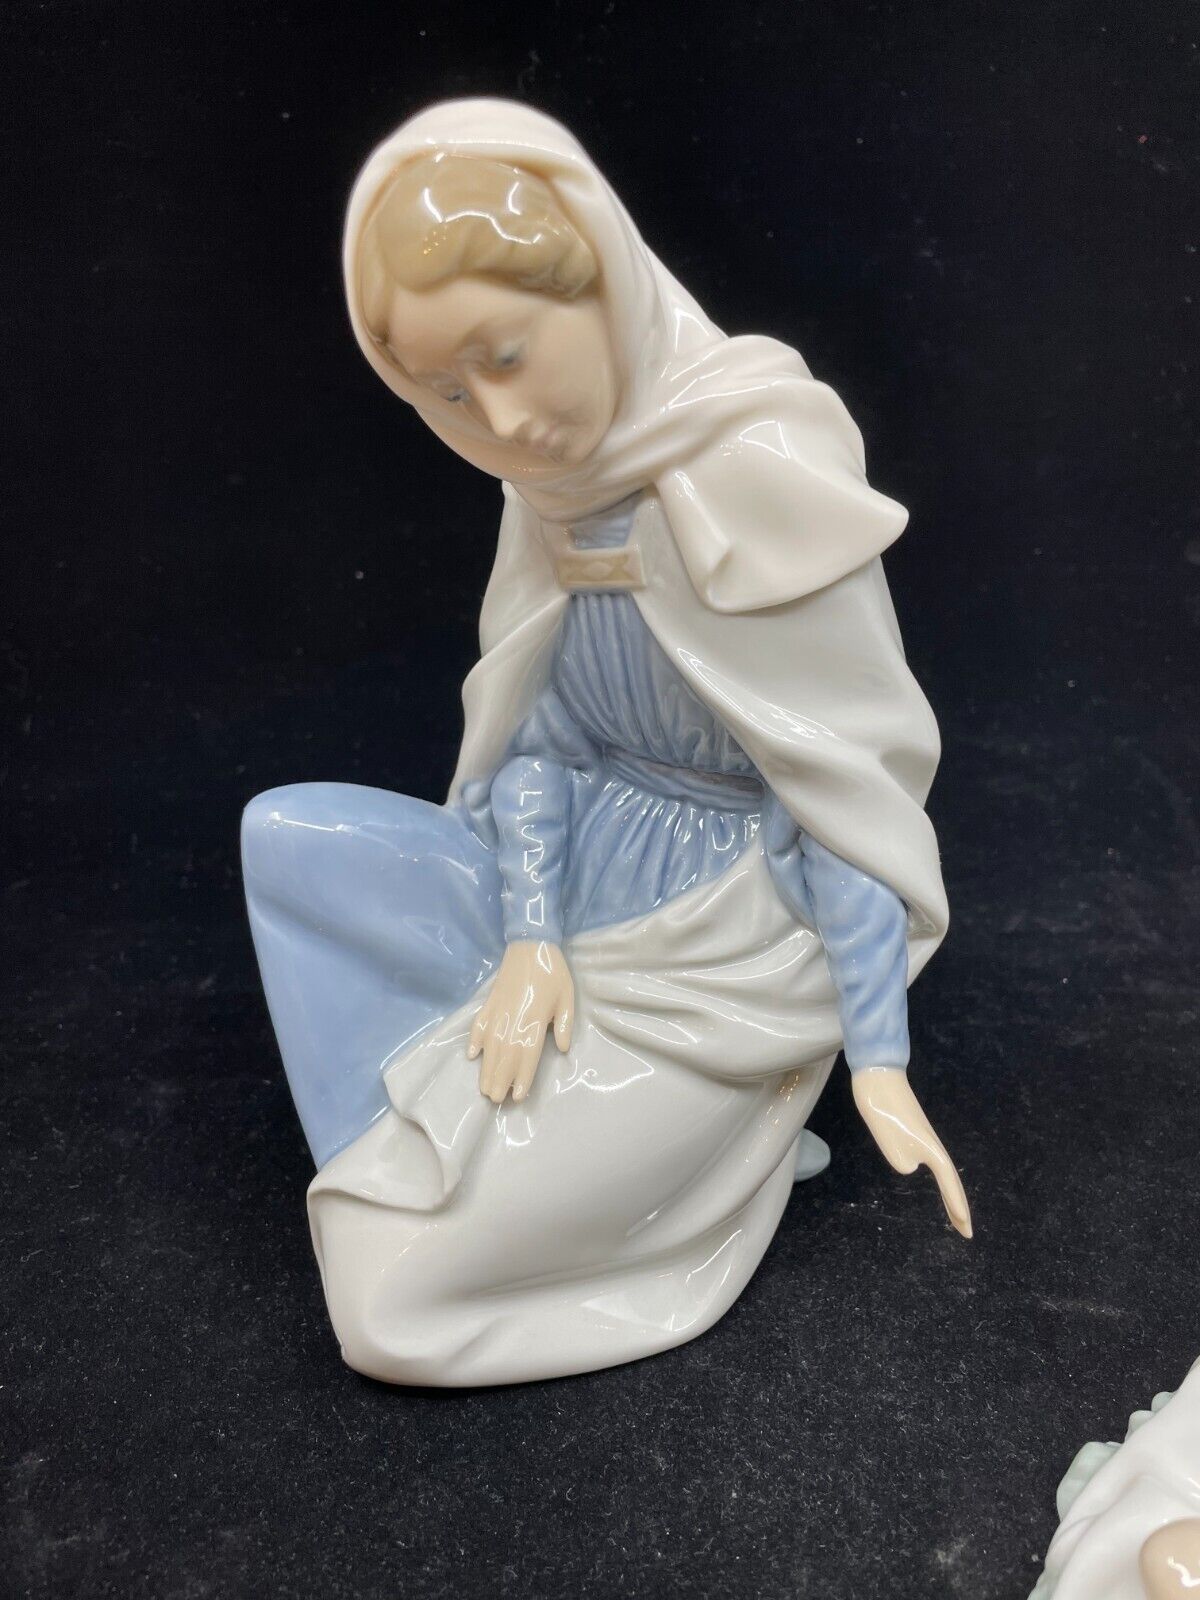 NAO Mary and Baby Jesus Figurine Set